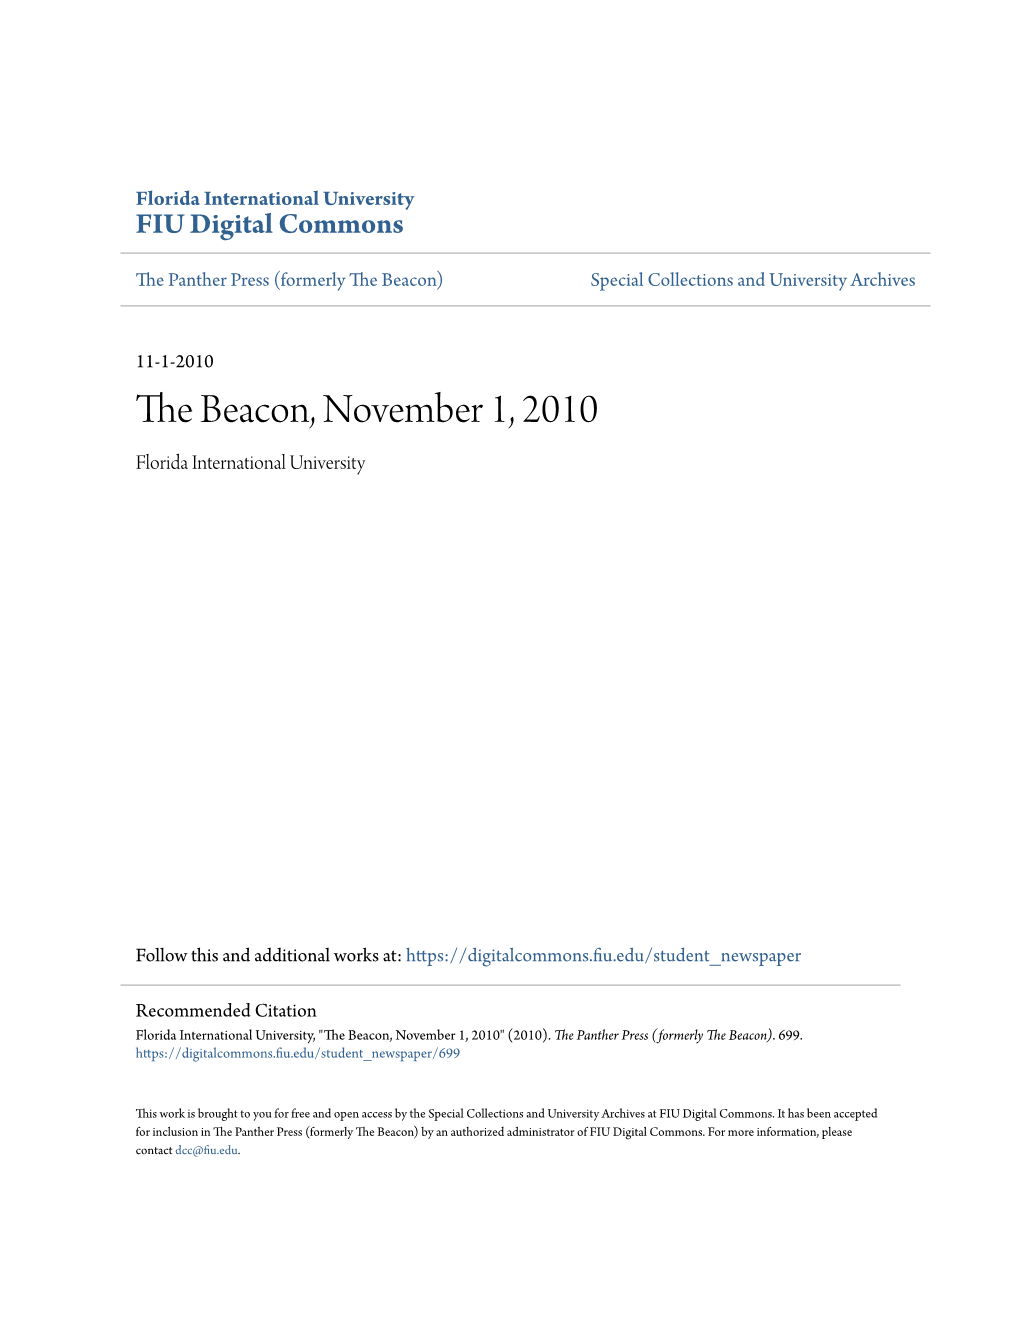 The Beacon, November 1, 2010 Florida International University